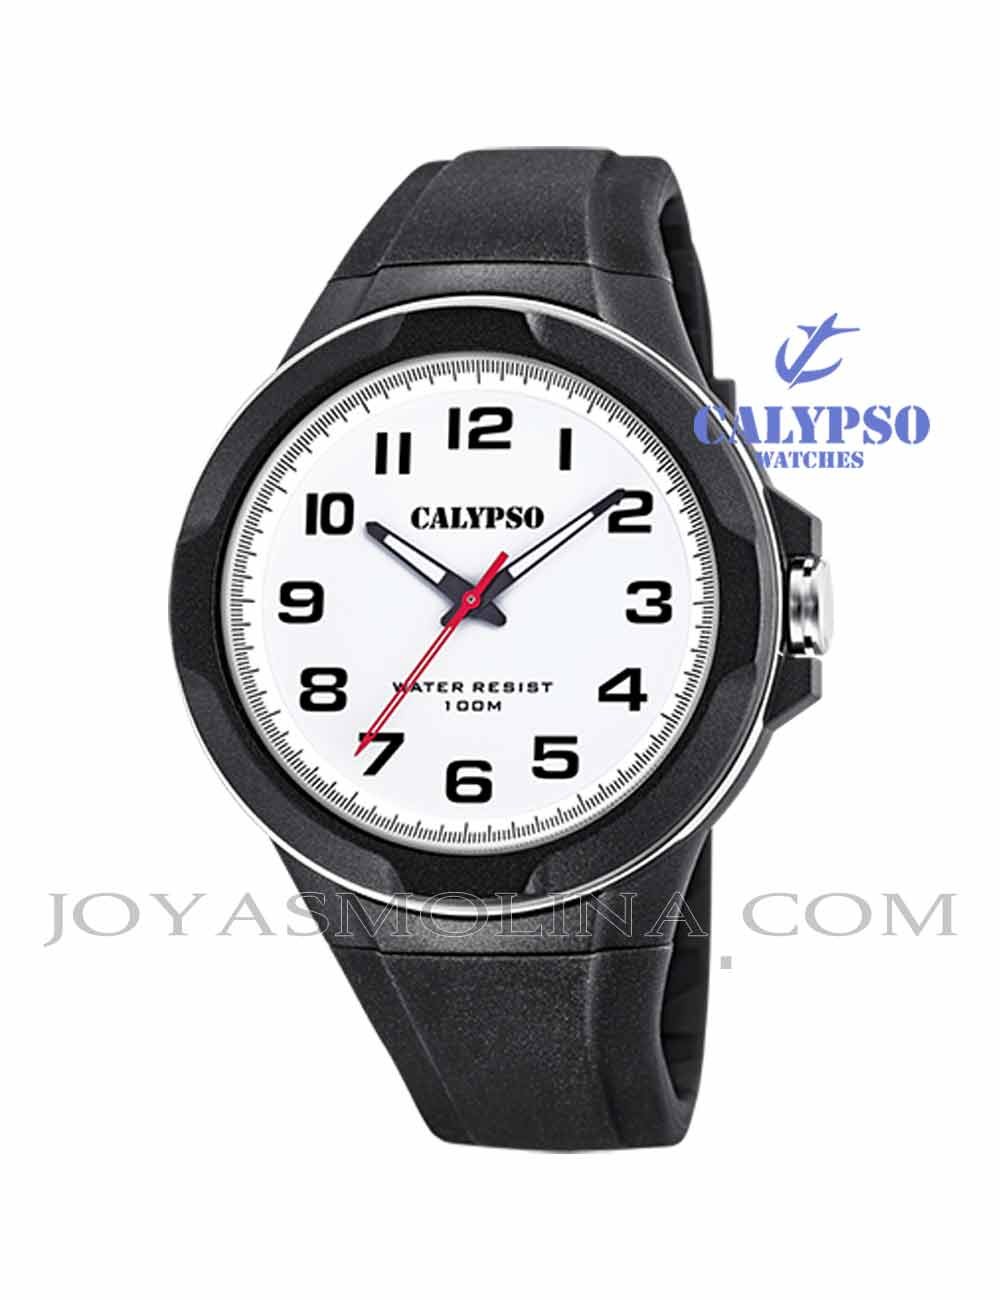 Reloj Calypso hombre goma negro con luz k5781-1